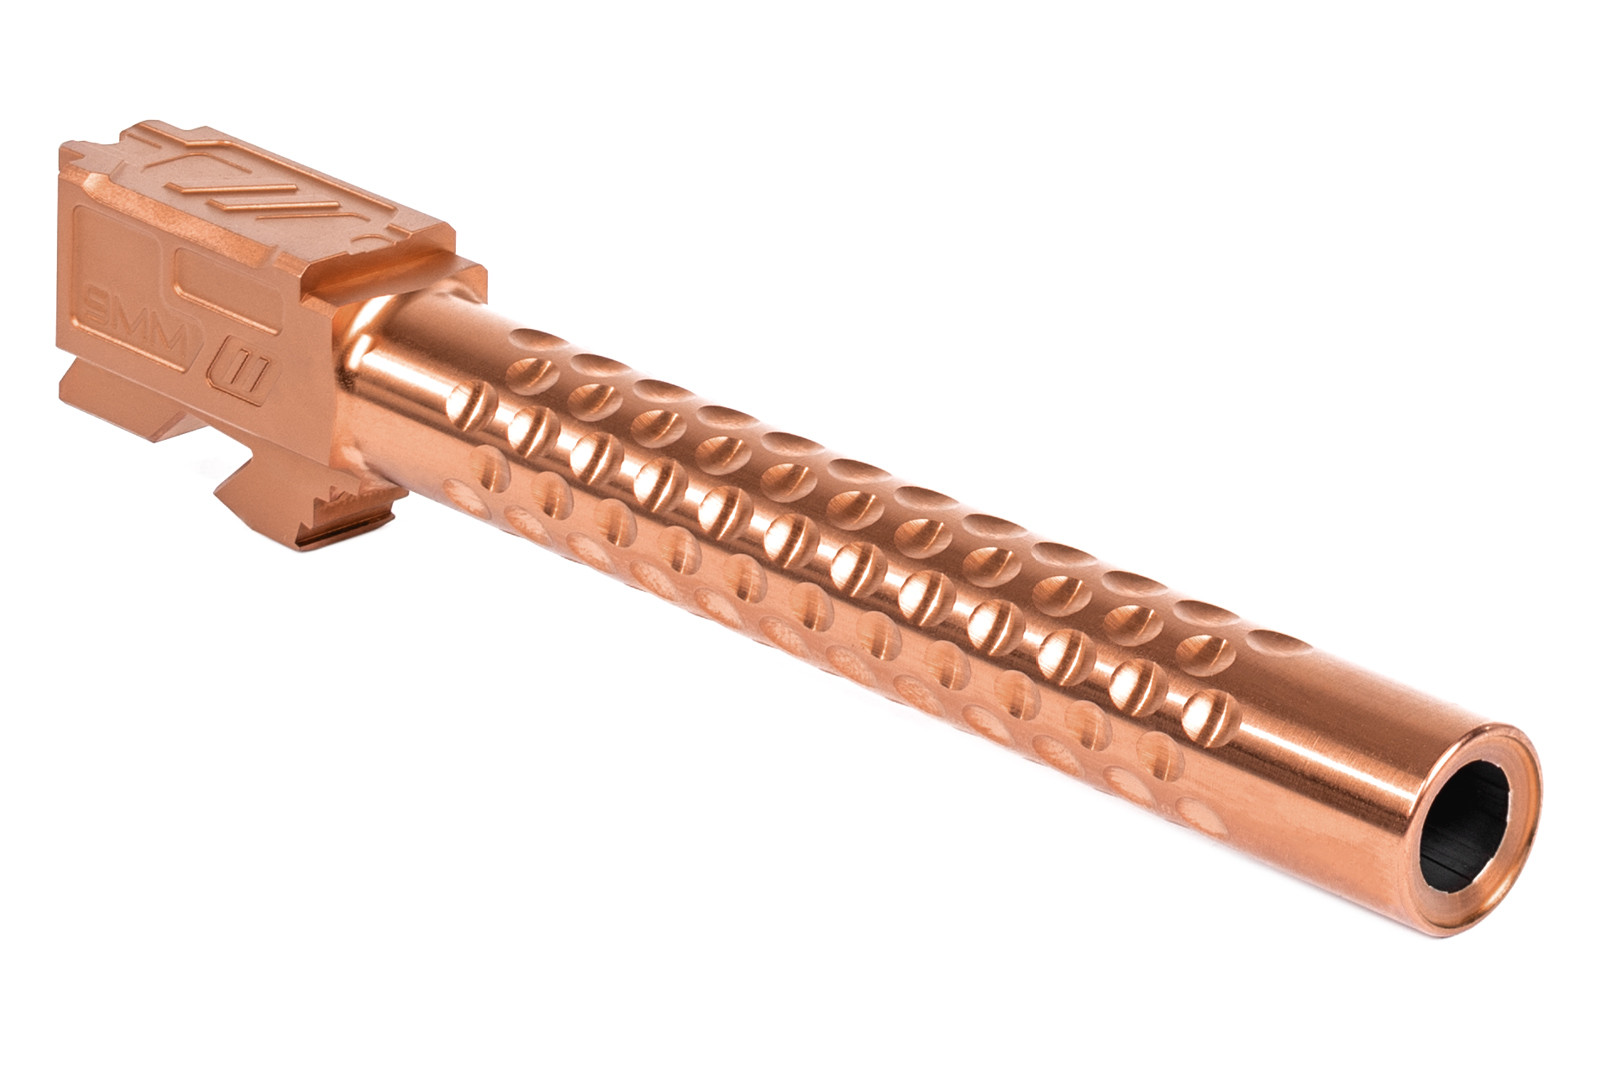 Hlaveň ZEV Optimized Match pro Glock 34 Gen 3/4, PVD Bronze